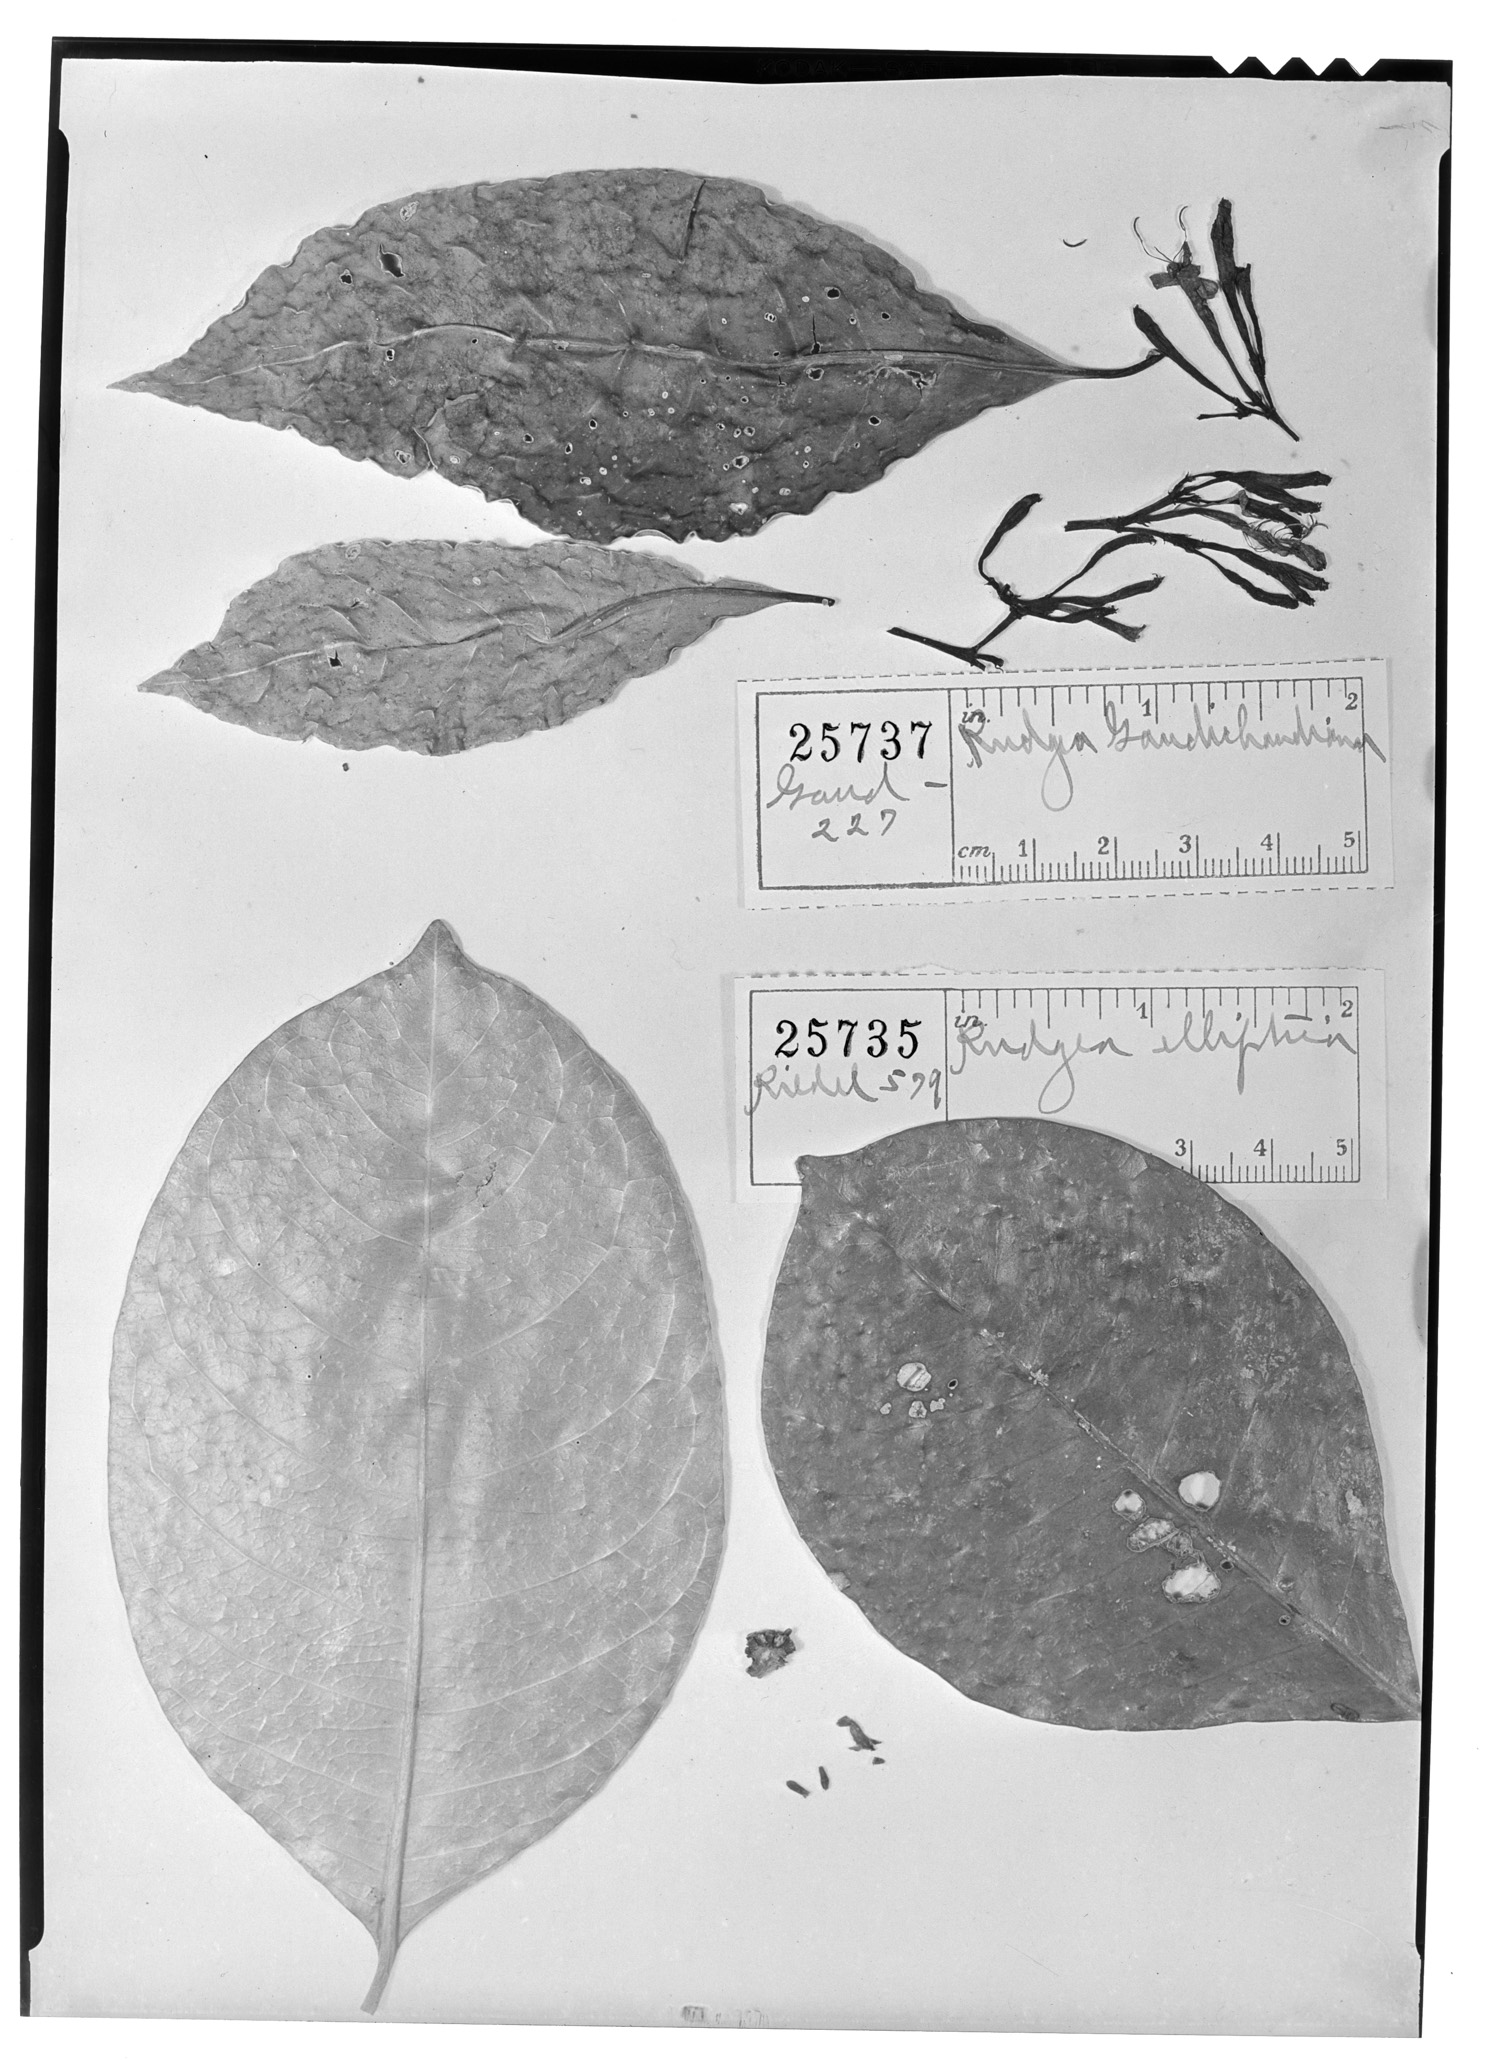 Rudgea jasminoides subsp. jasminoides image